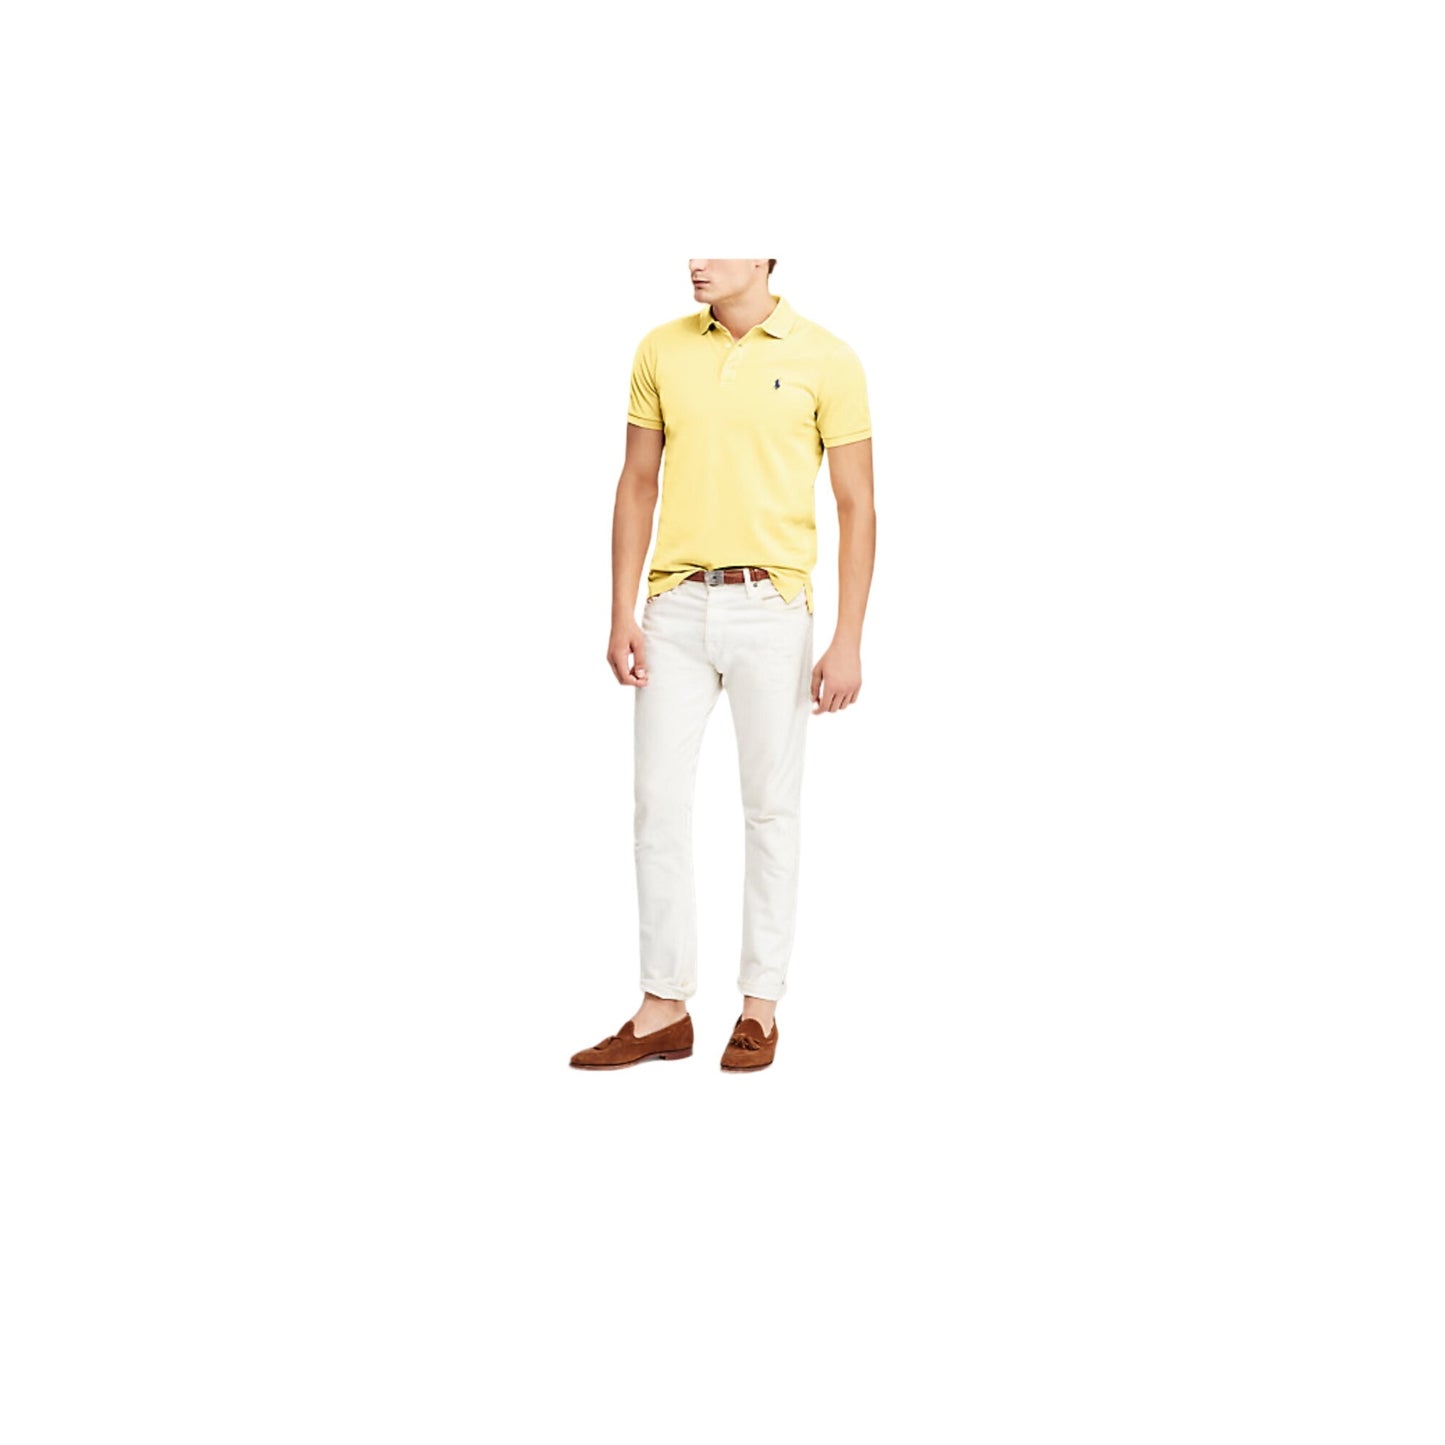 Polo Ralph Lauren Yellow Polo Shirt with Blue Jockey